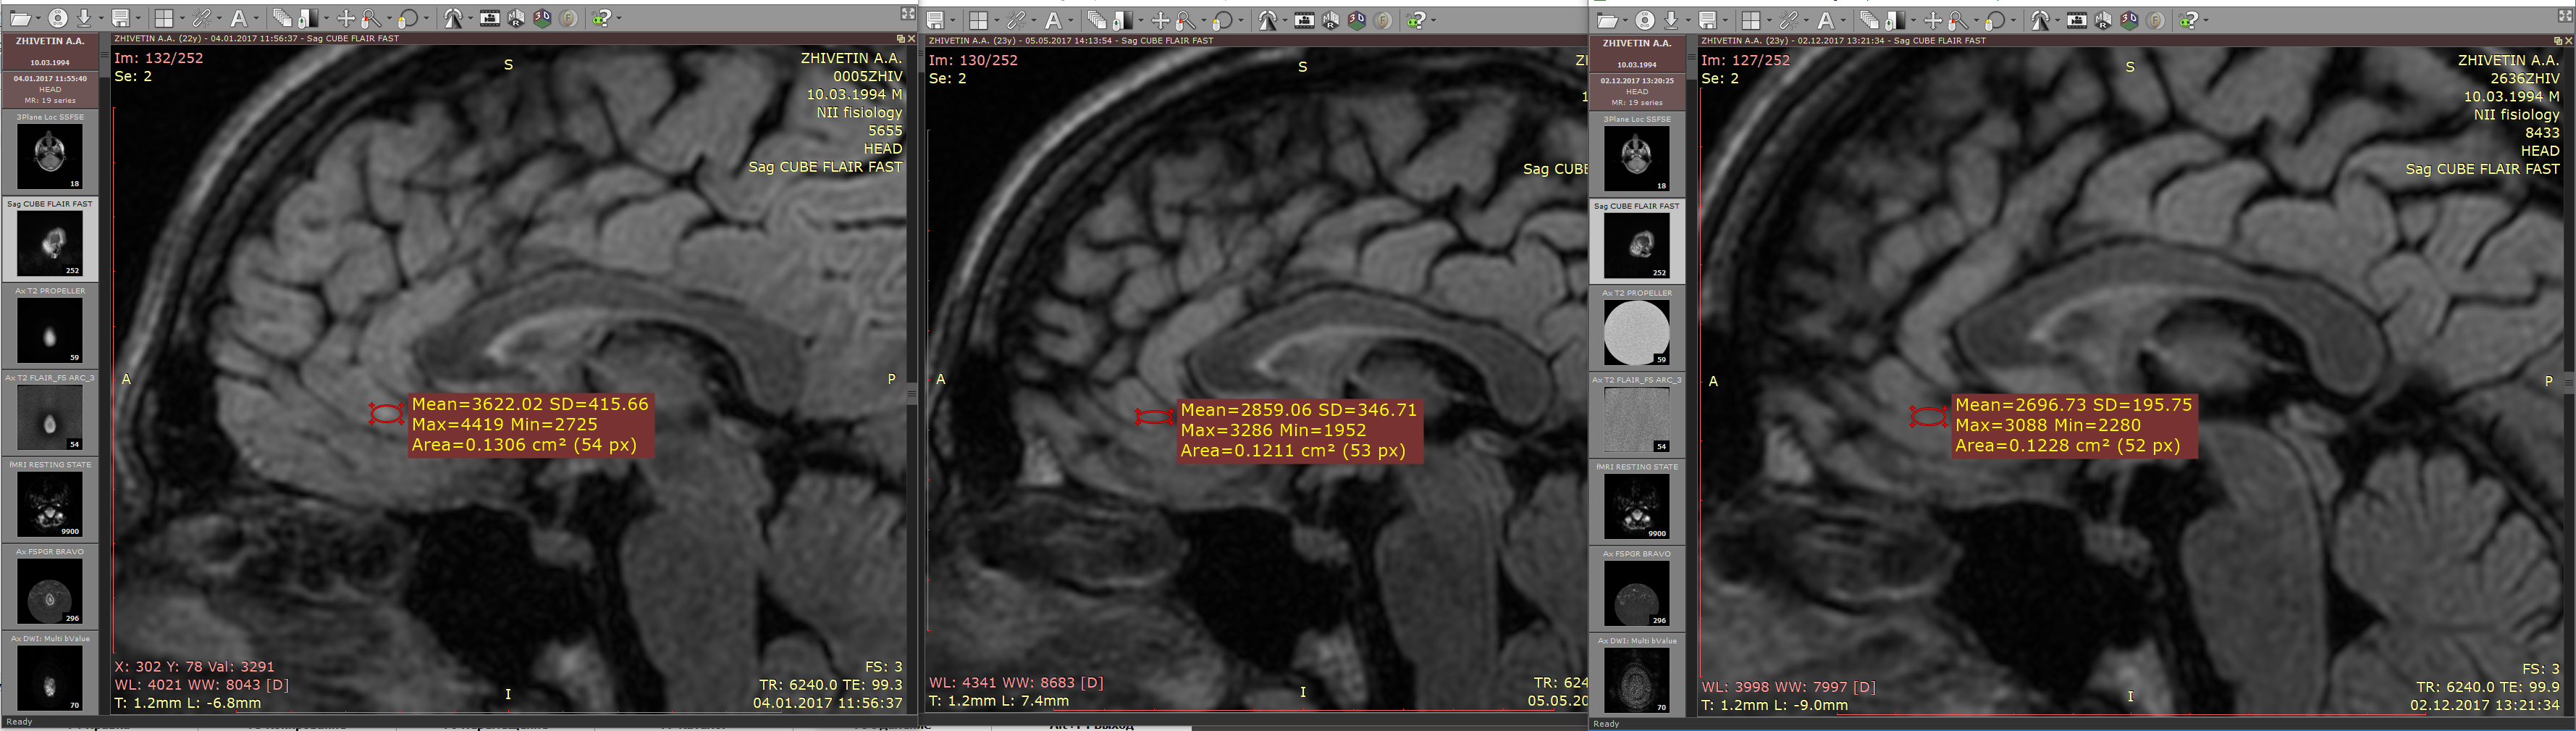 Динамическая картина MRT пациента с шизофренией